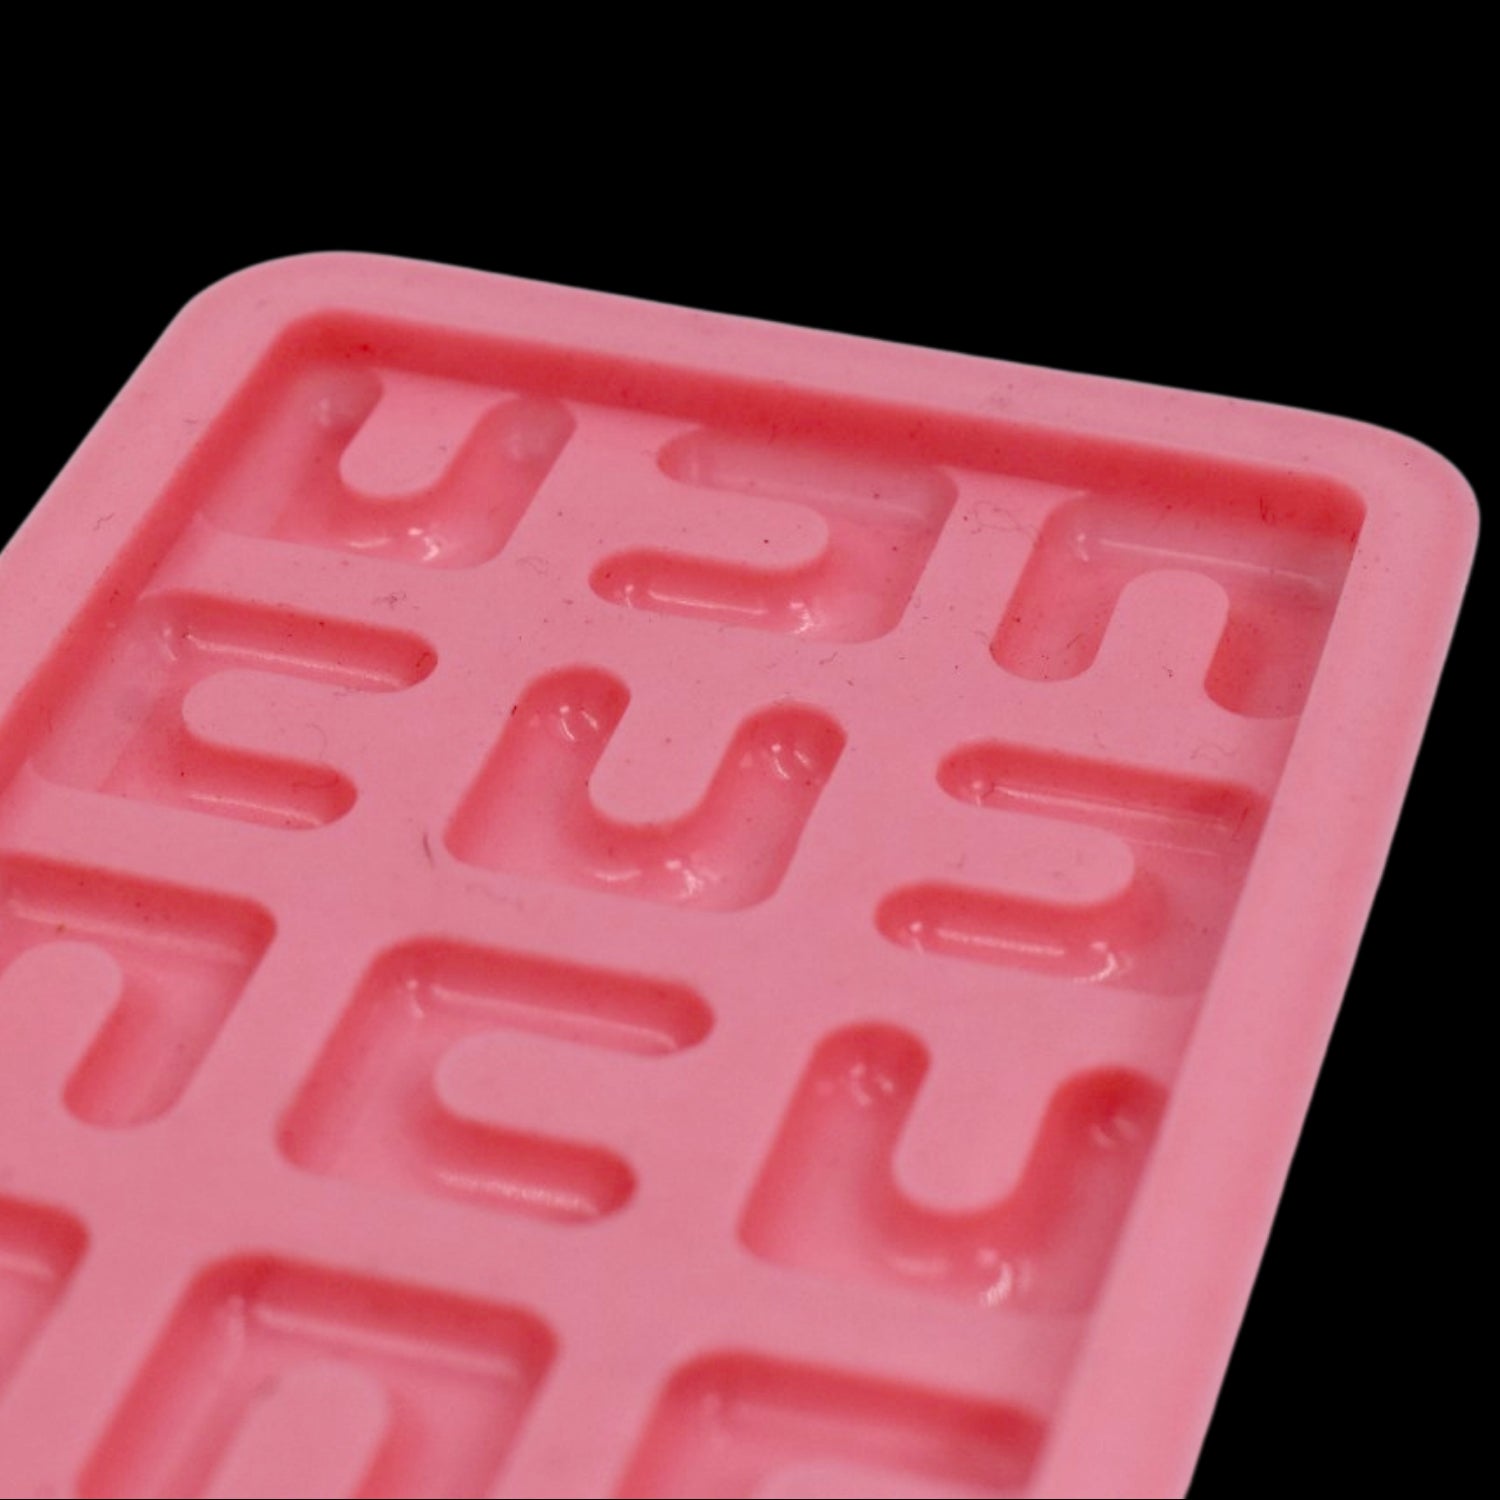 4889 Maze shape chocolate mold tray cake baking mold Flexible silicone chocolate making tool 